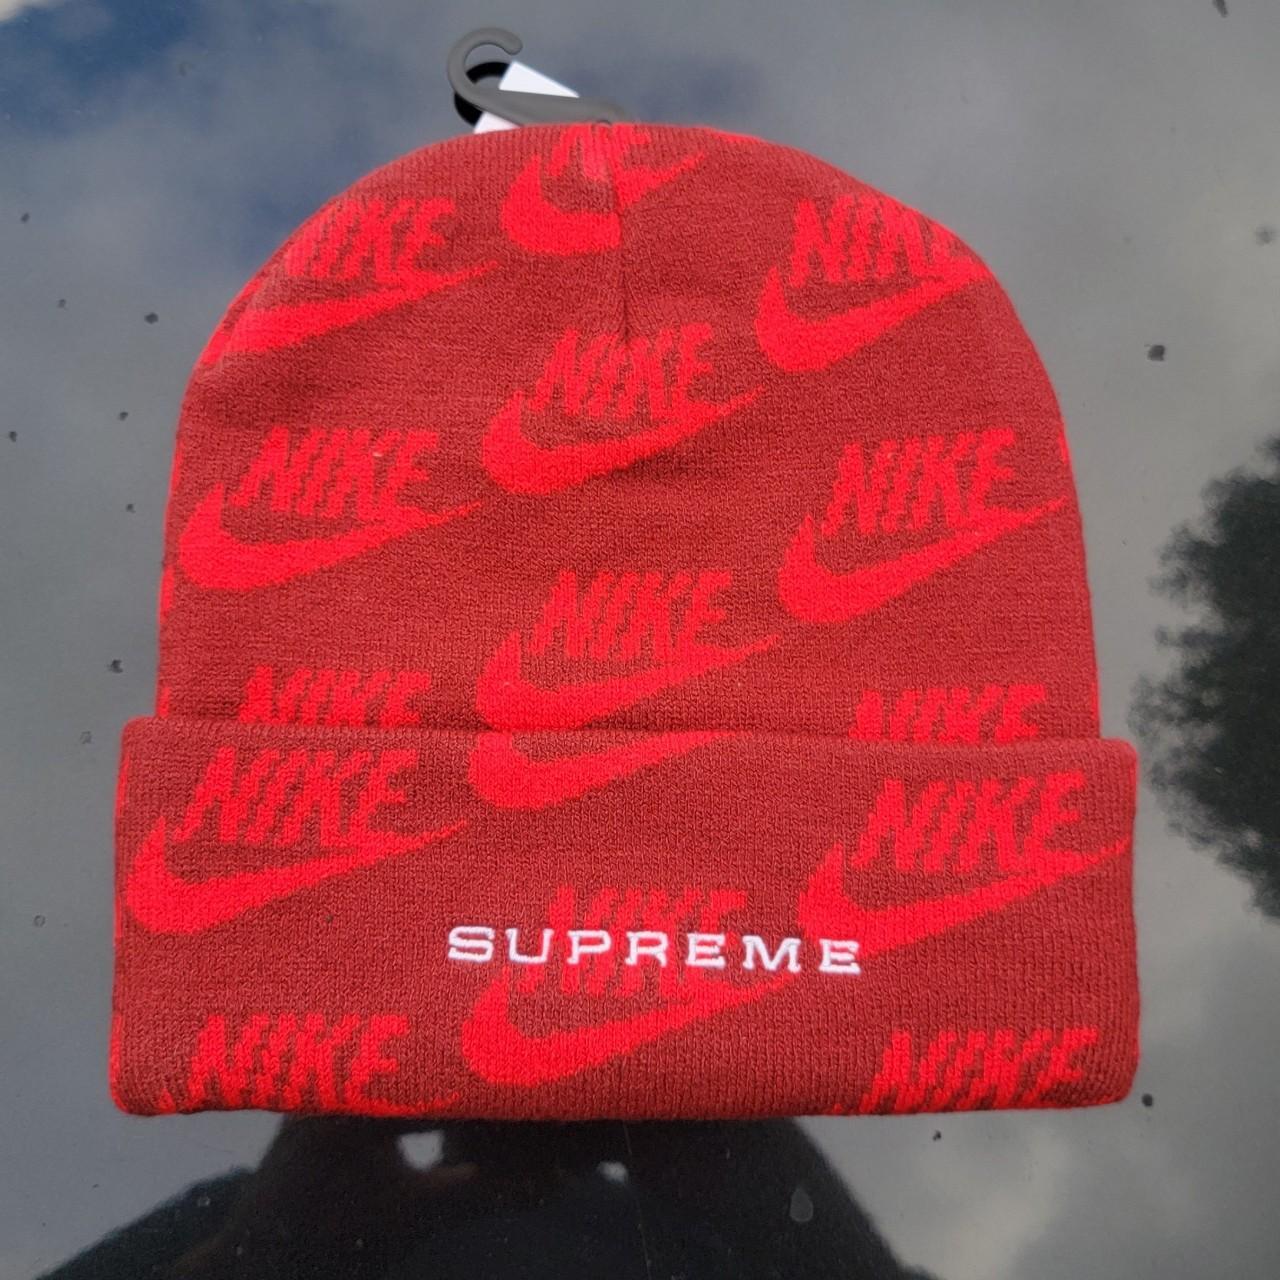 Supreme Nike Jacquard Logos Beanie in Red colorway. - Depop